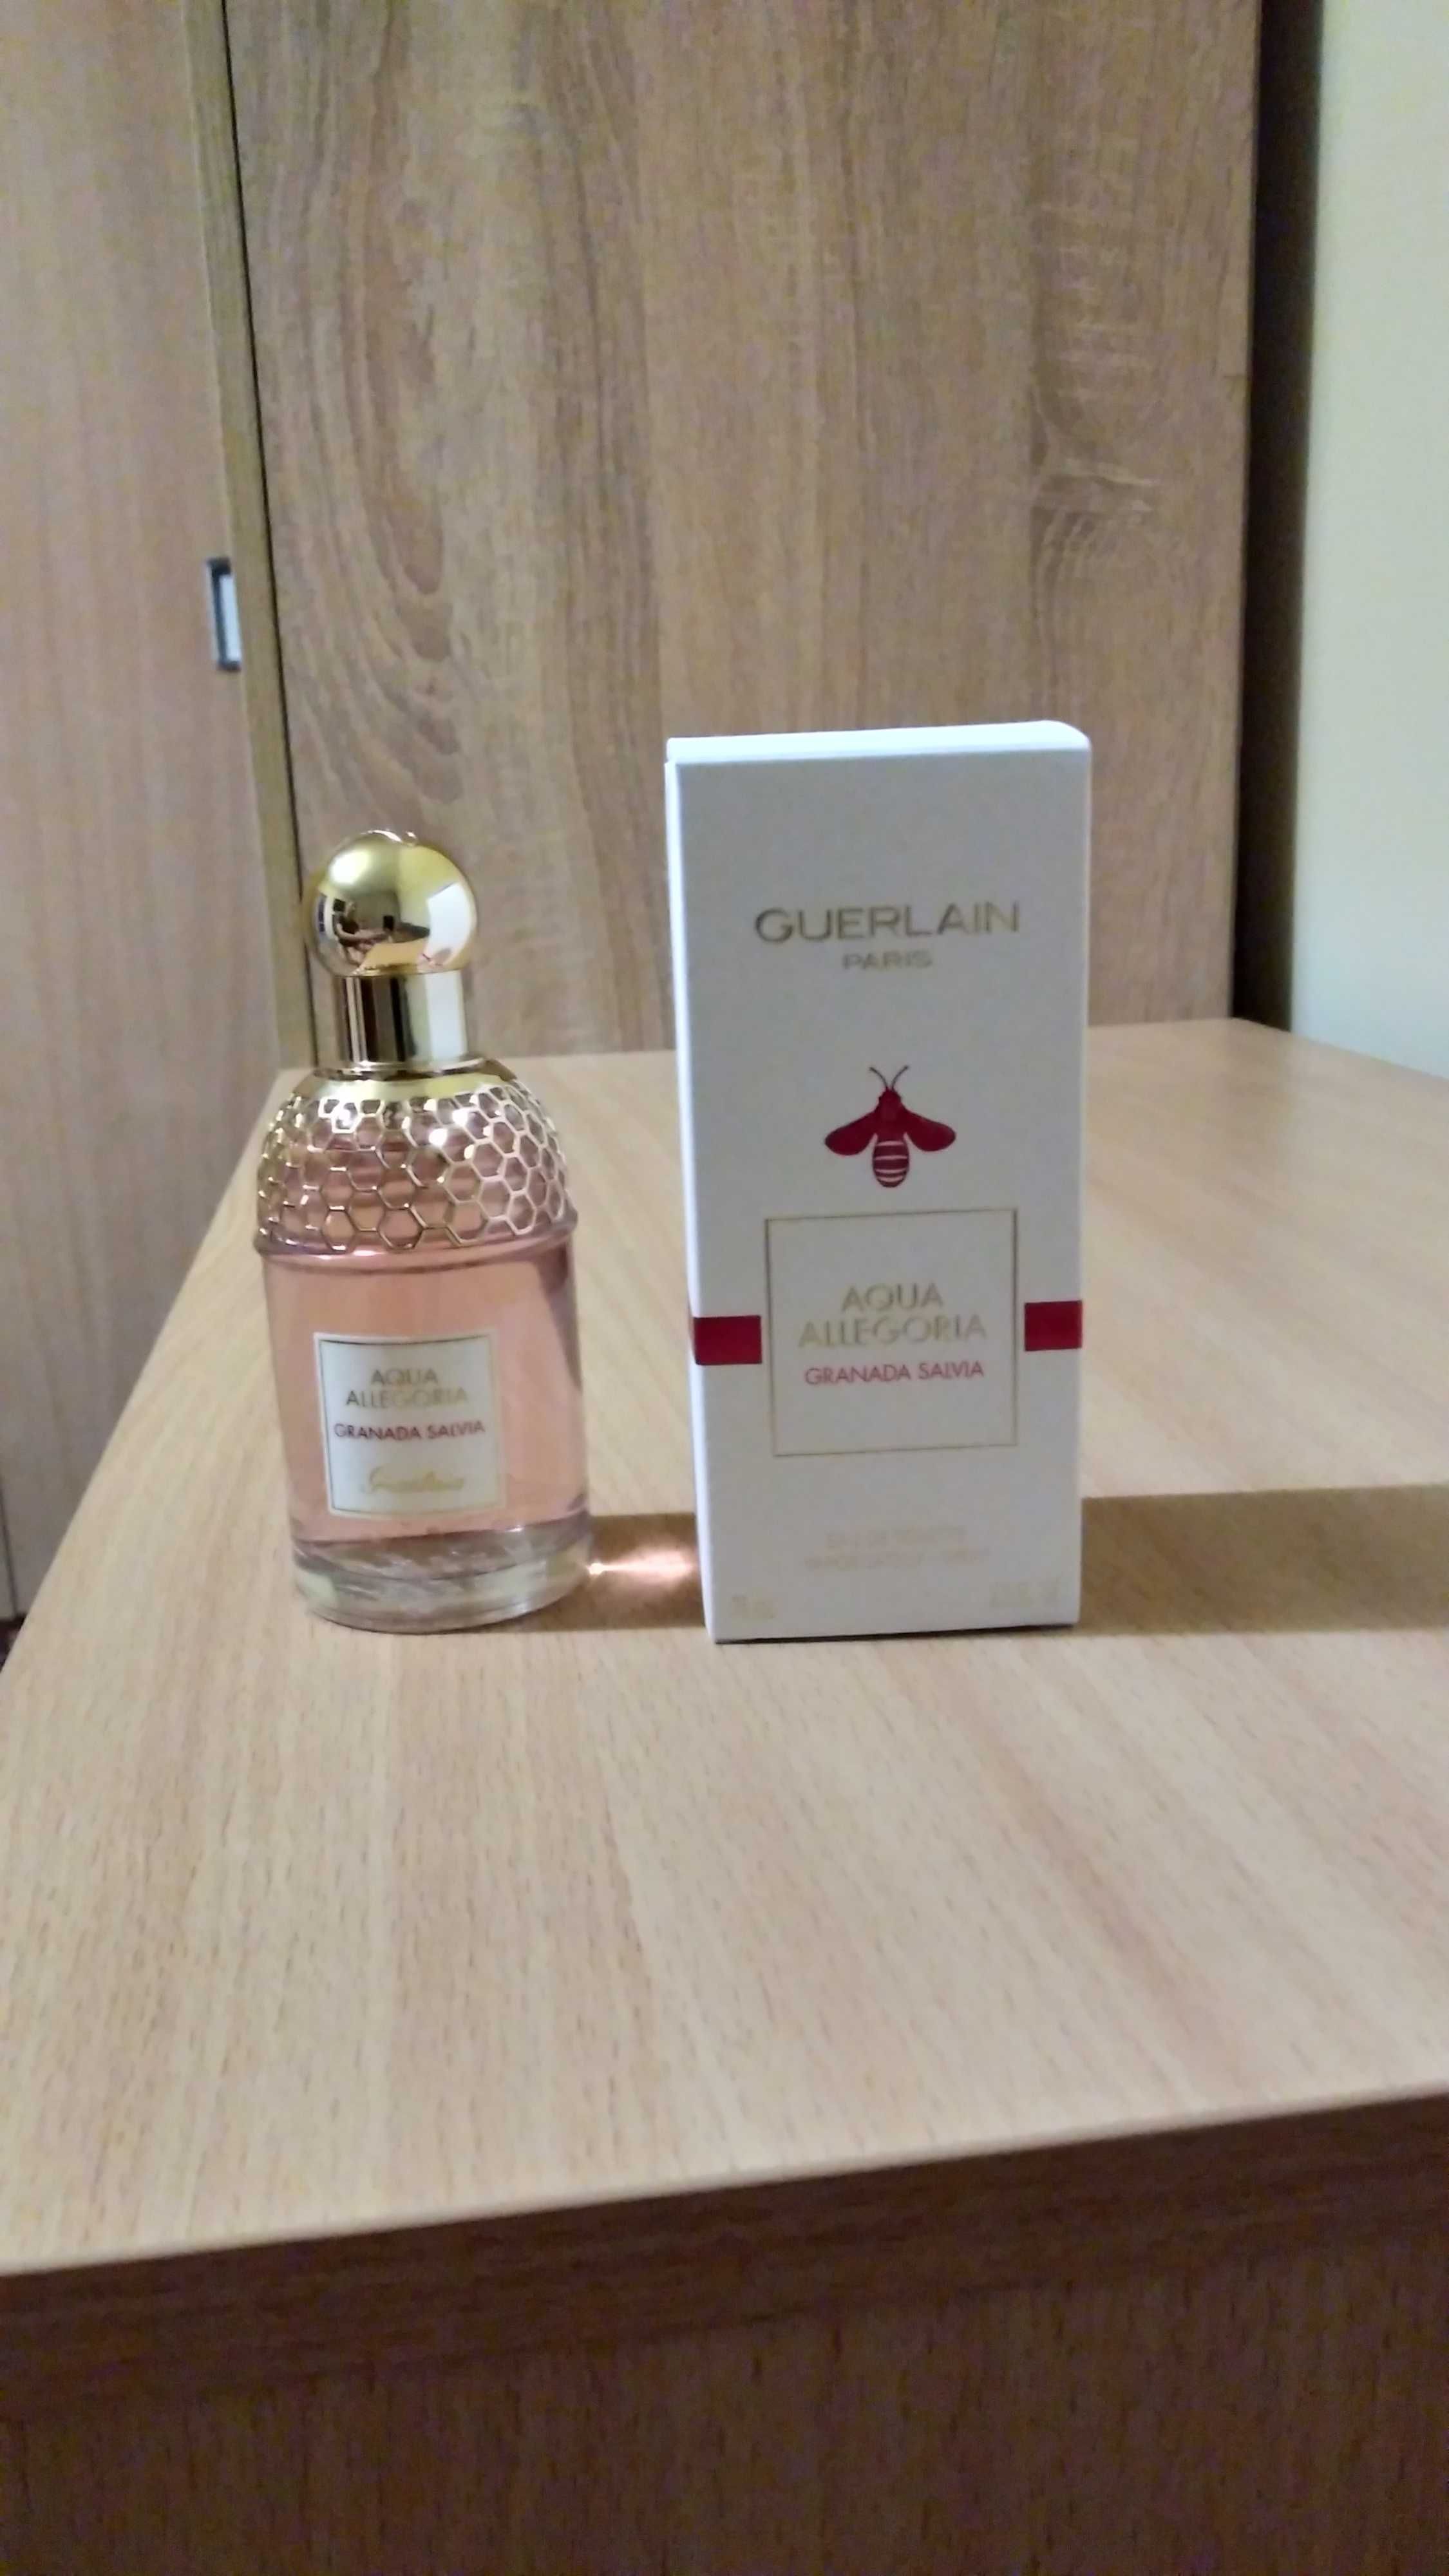 Продам парфюм Guerlain Aqua Allegoria Granada Salvia. Оригинал.